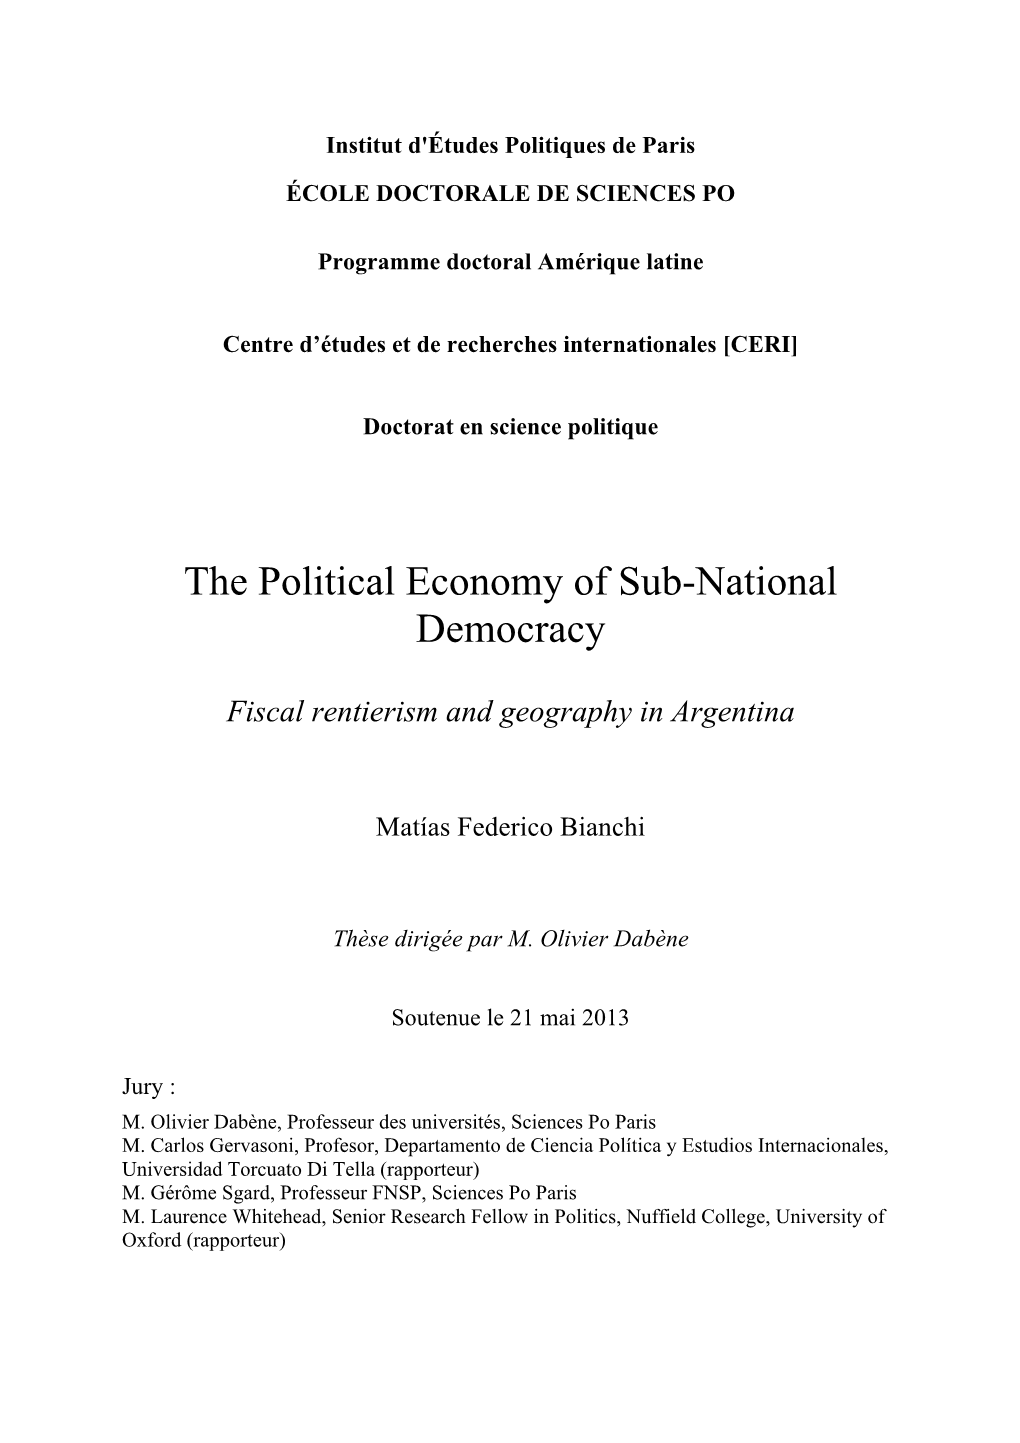 The Political Economy of Sub-National Democracy